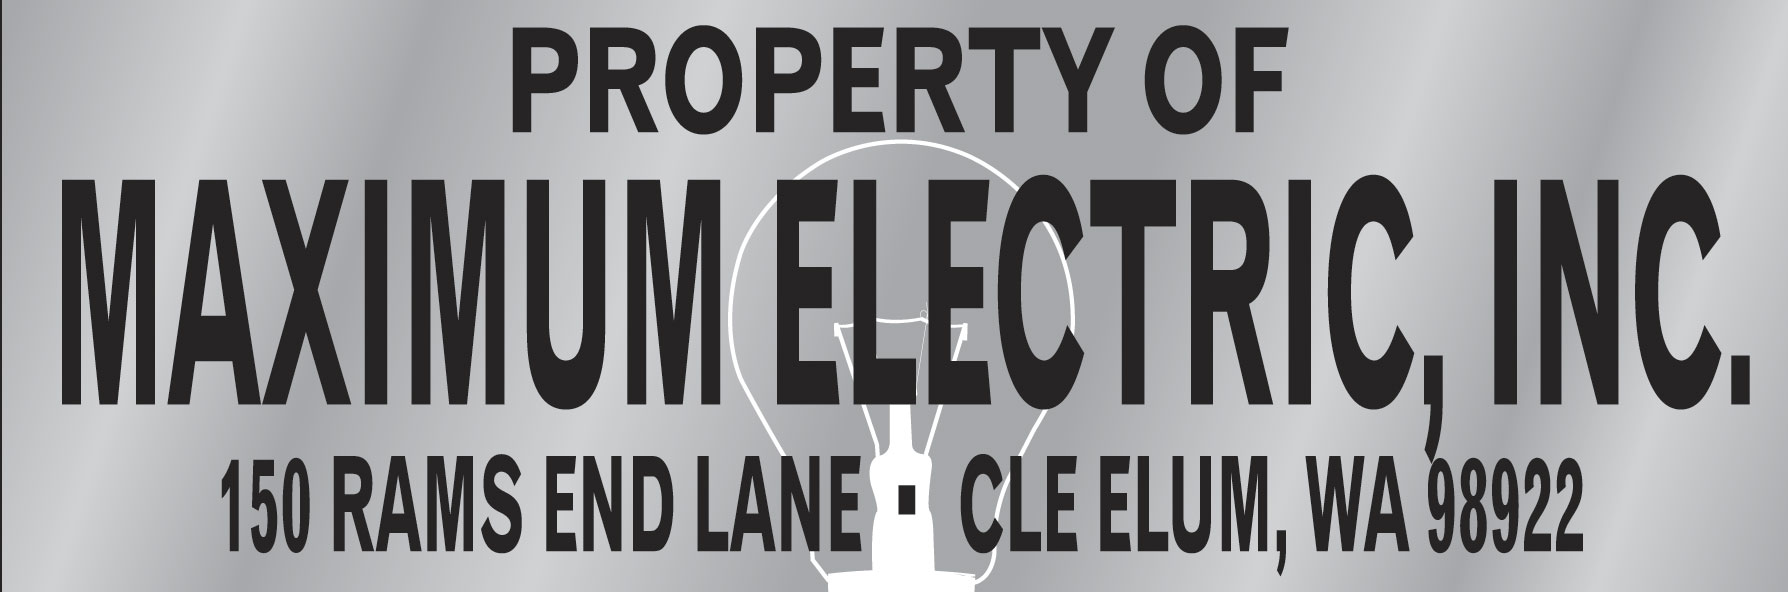 Maximum Electric Property Sticker